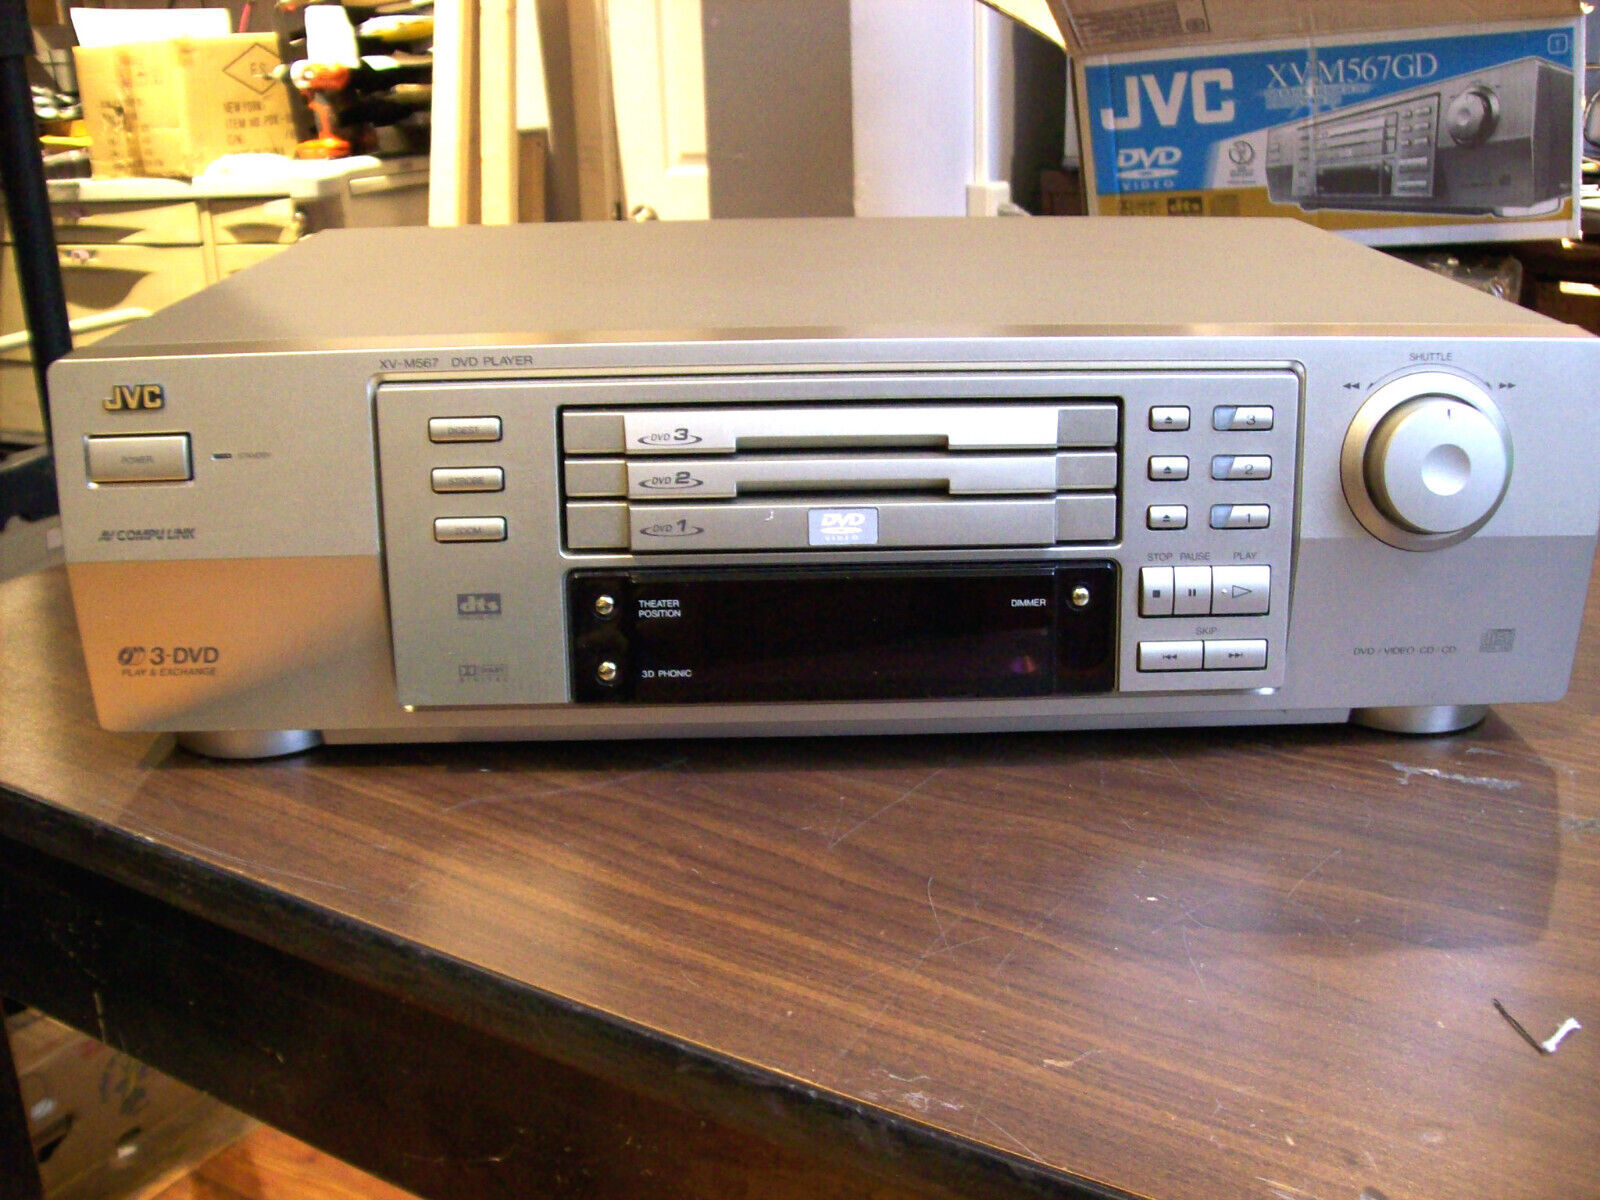 JVC XV-M567 DVD/CD Player 3-Disc Tray Storage in Box - Serviced - $79.90